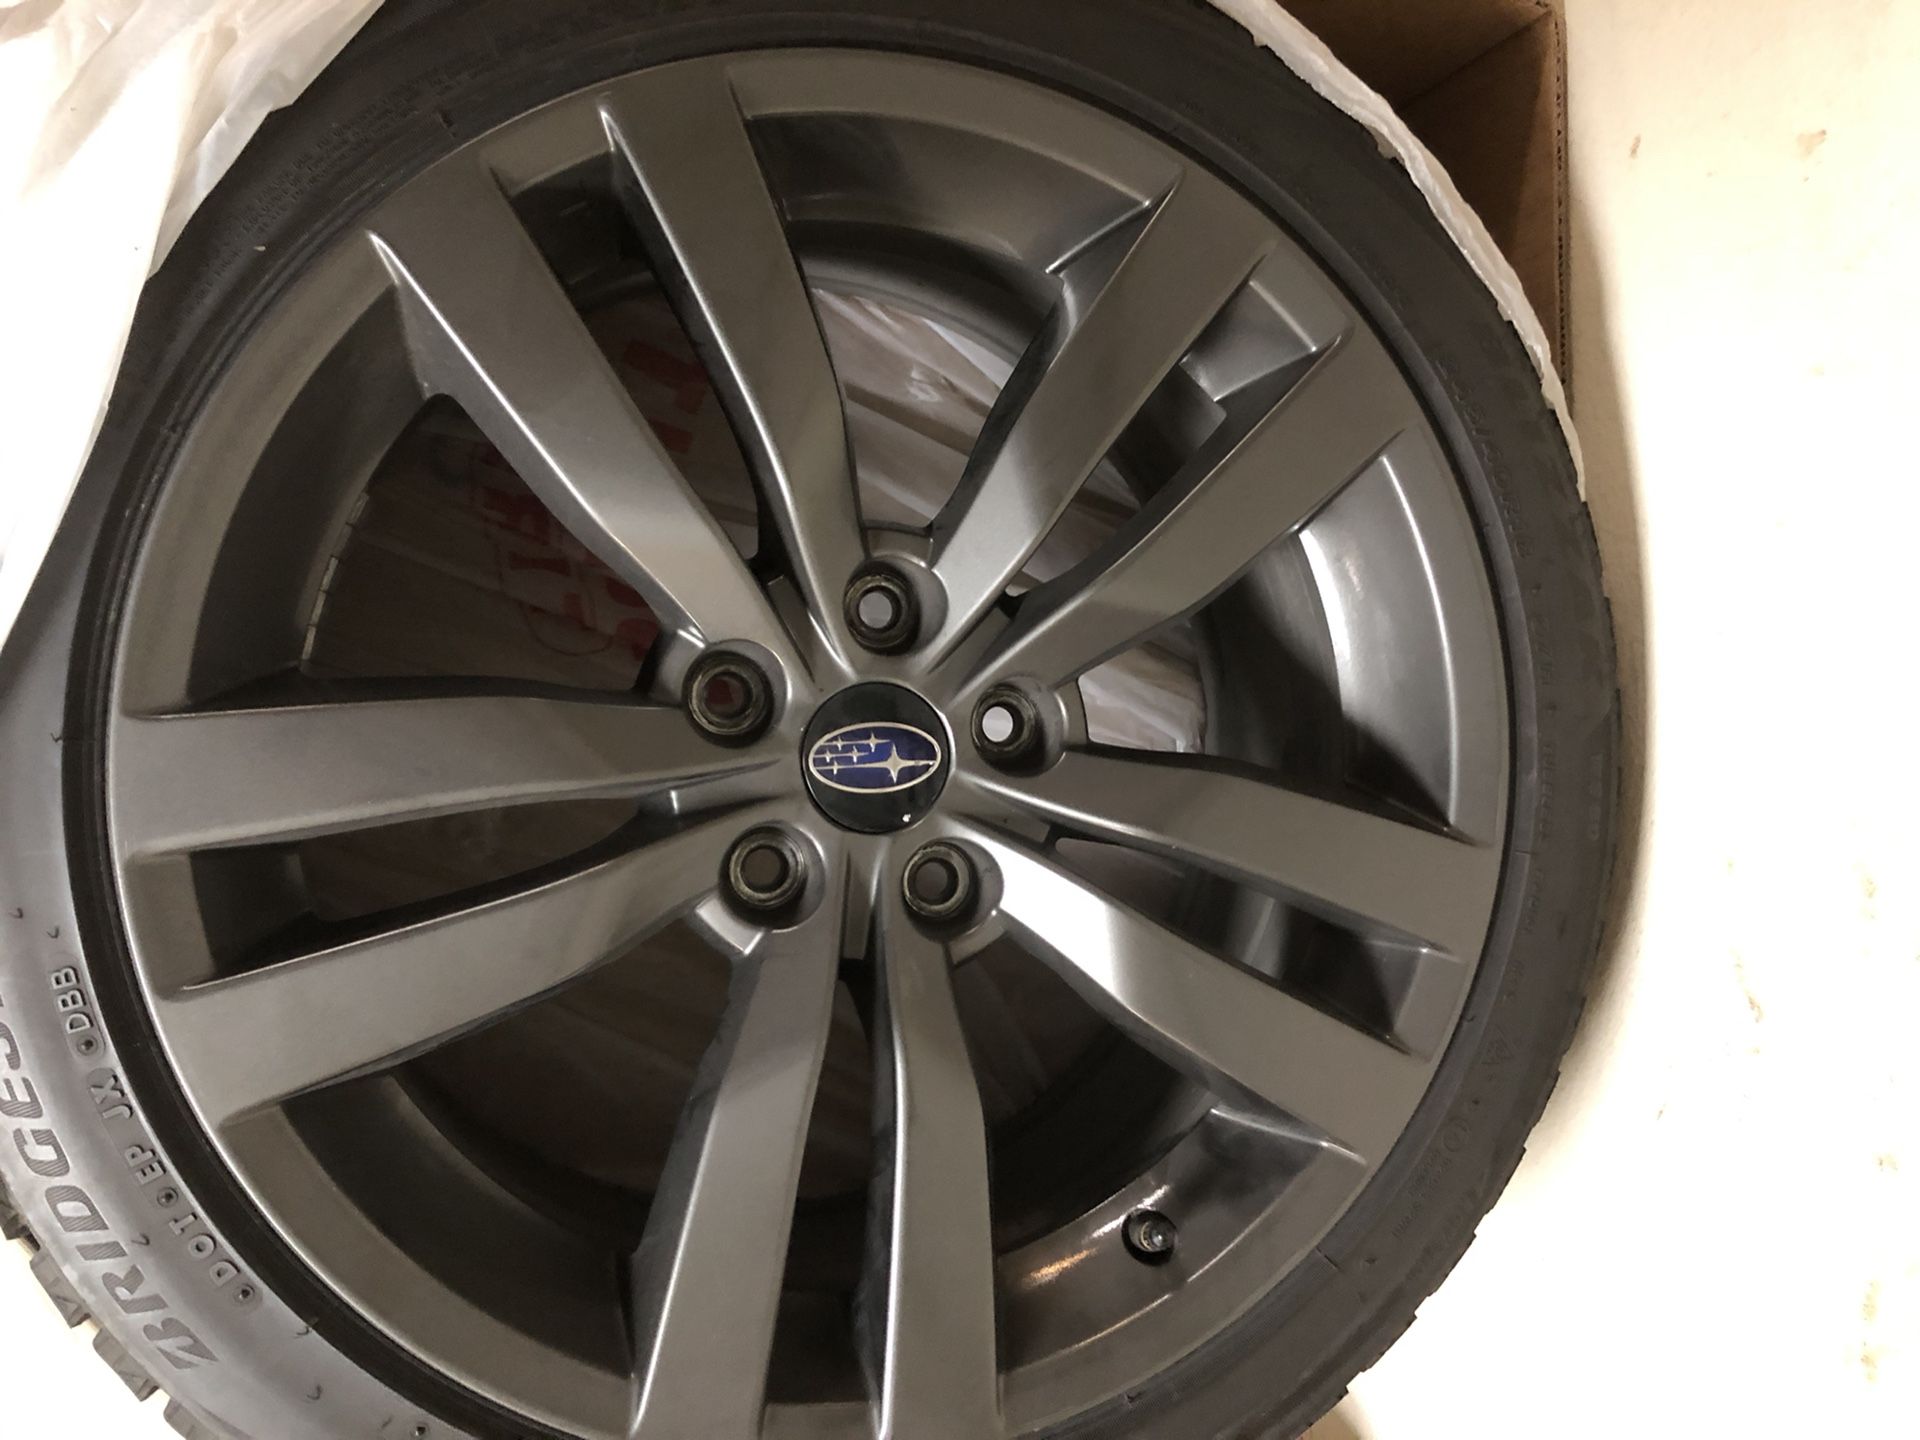 245/40 R18 Blizzak w/ OEM 2017 WRX wheels and OEM TPMS